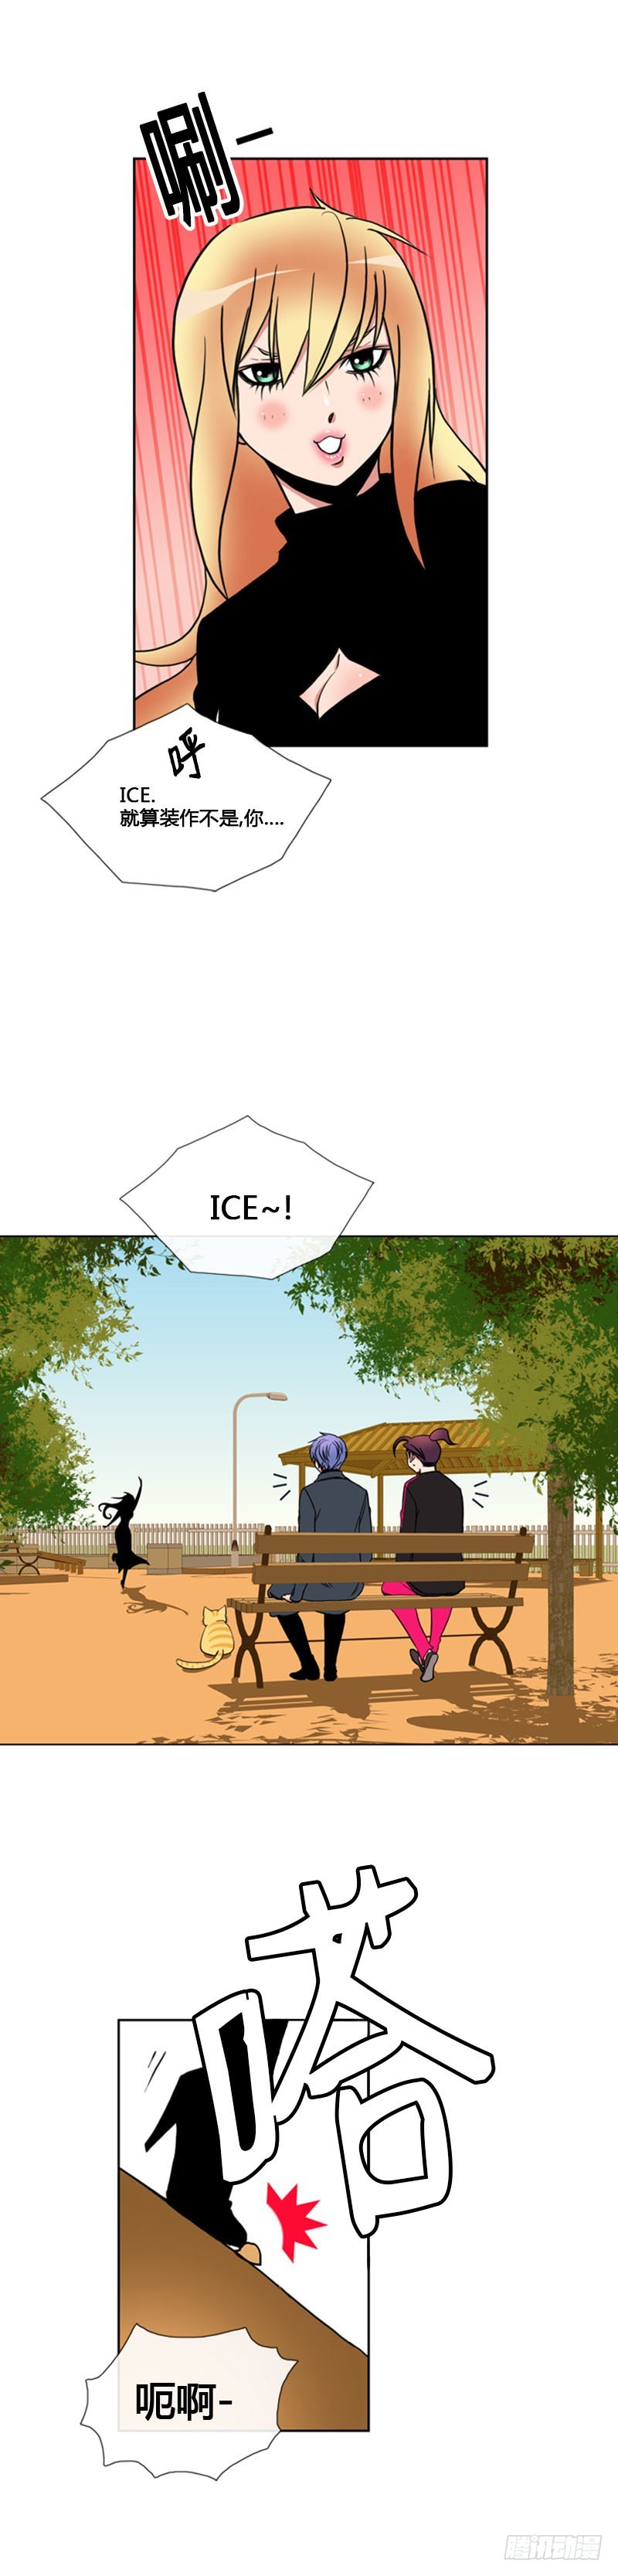 ICE-Cold人員的撿貓事件 - 第七十三話 - 1